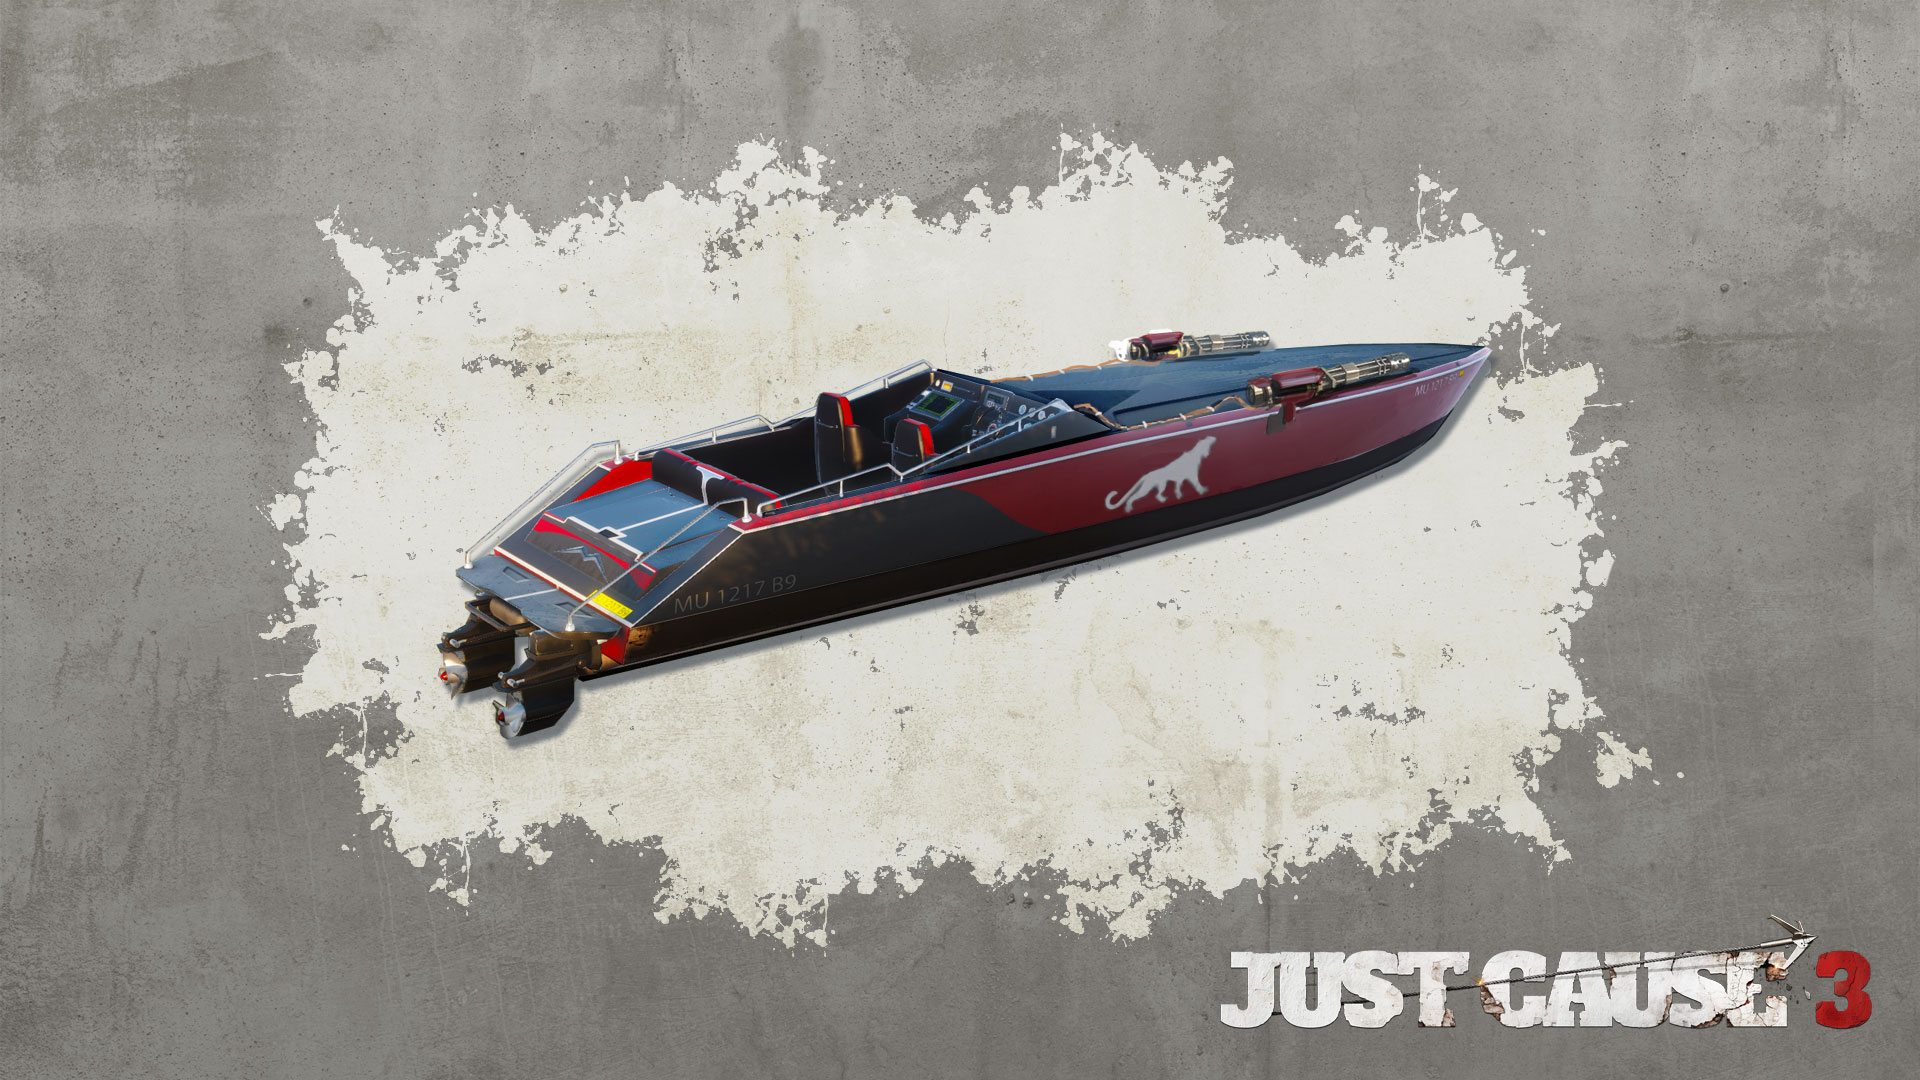 Just Cause 3 - Mini-Gun Racing Boat DLC Steam CD Key 1.56 $